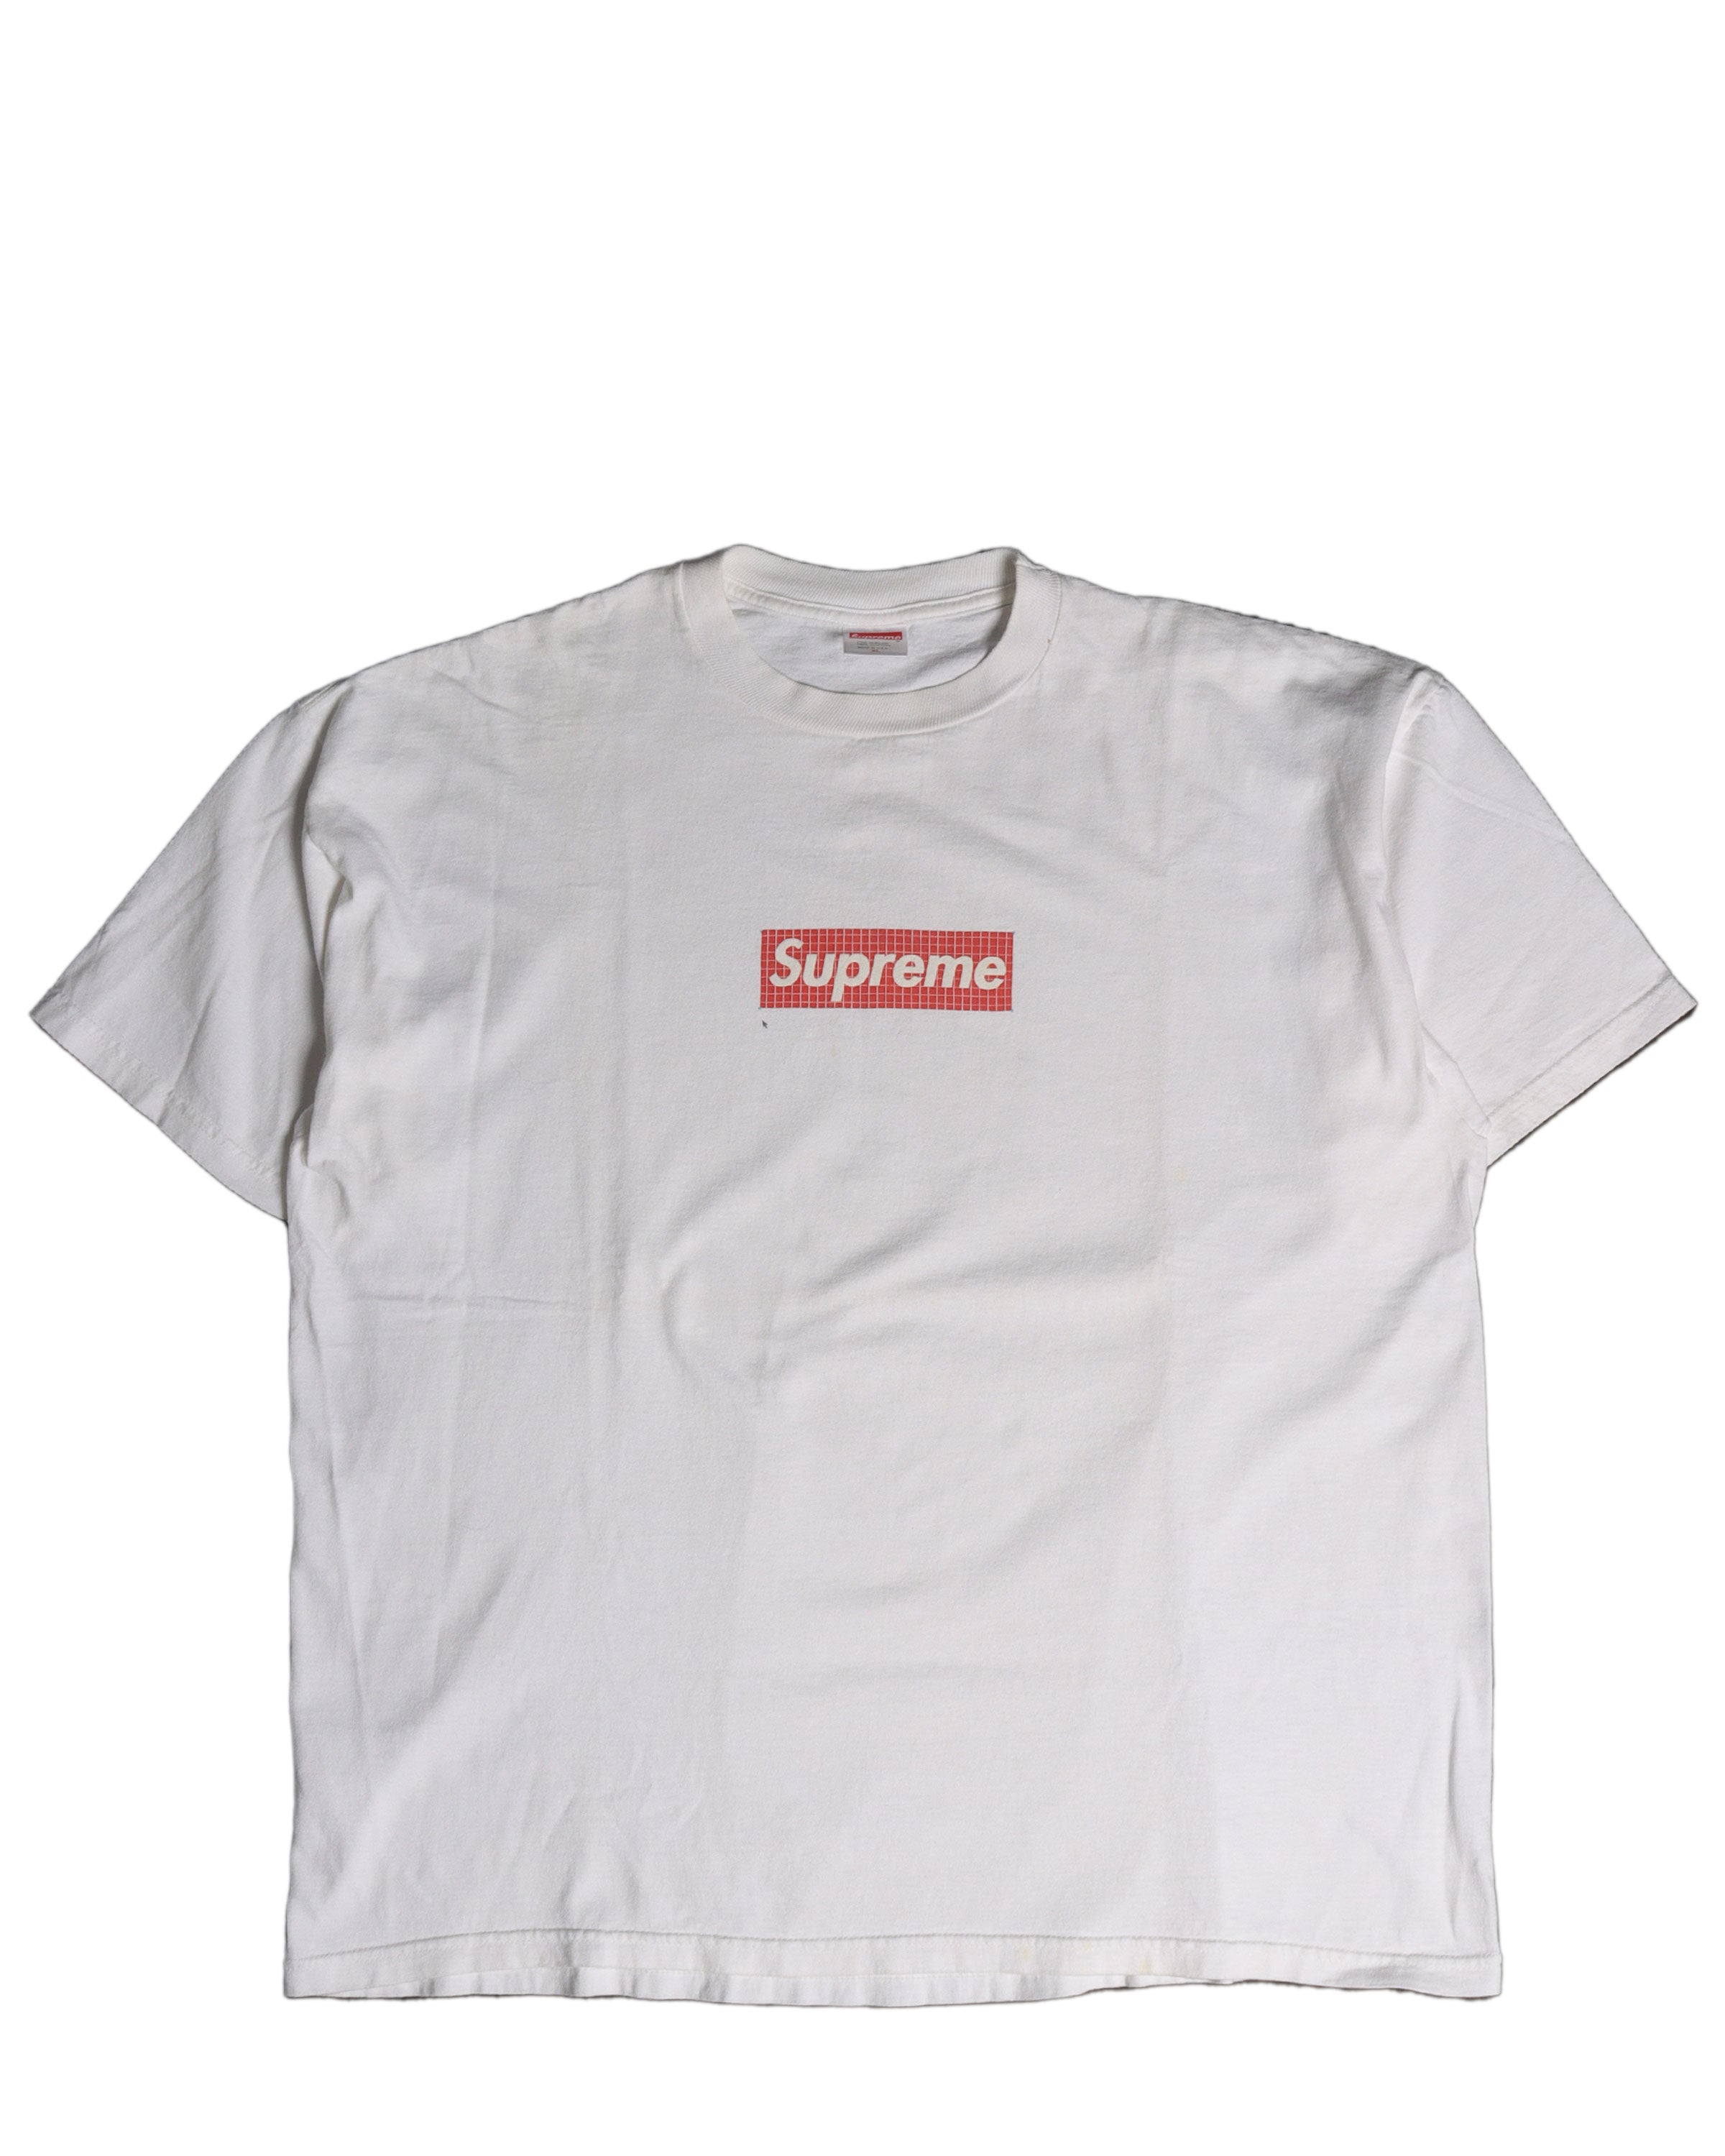 Supreme Tokyo Store Grand Opening Exclusive Box-Logo T-Shirt (1998)